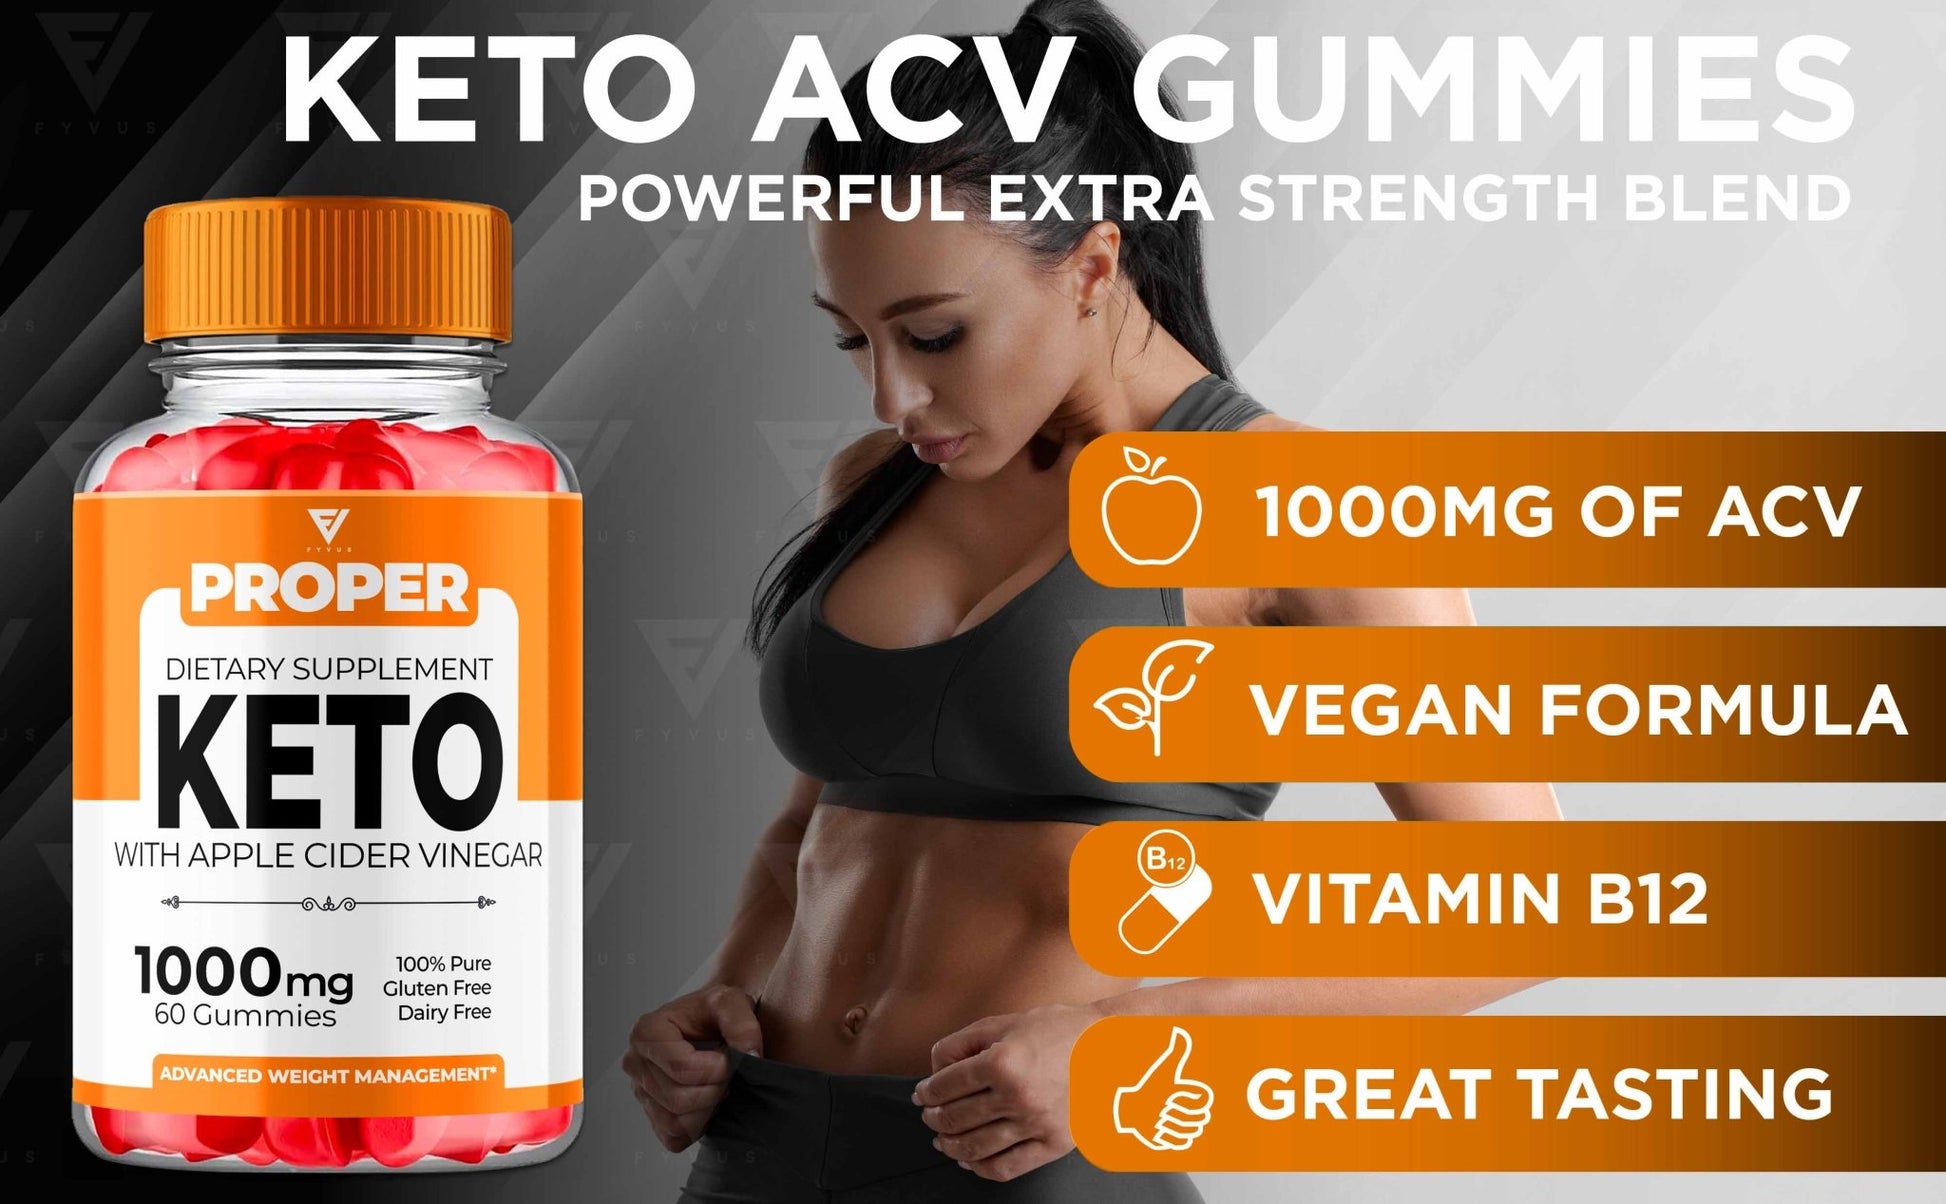 Proper - Keto ACV Gummies - Vitamin Place